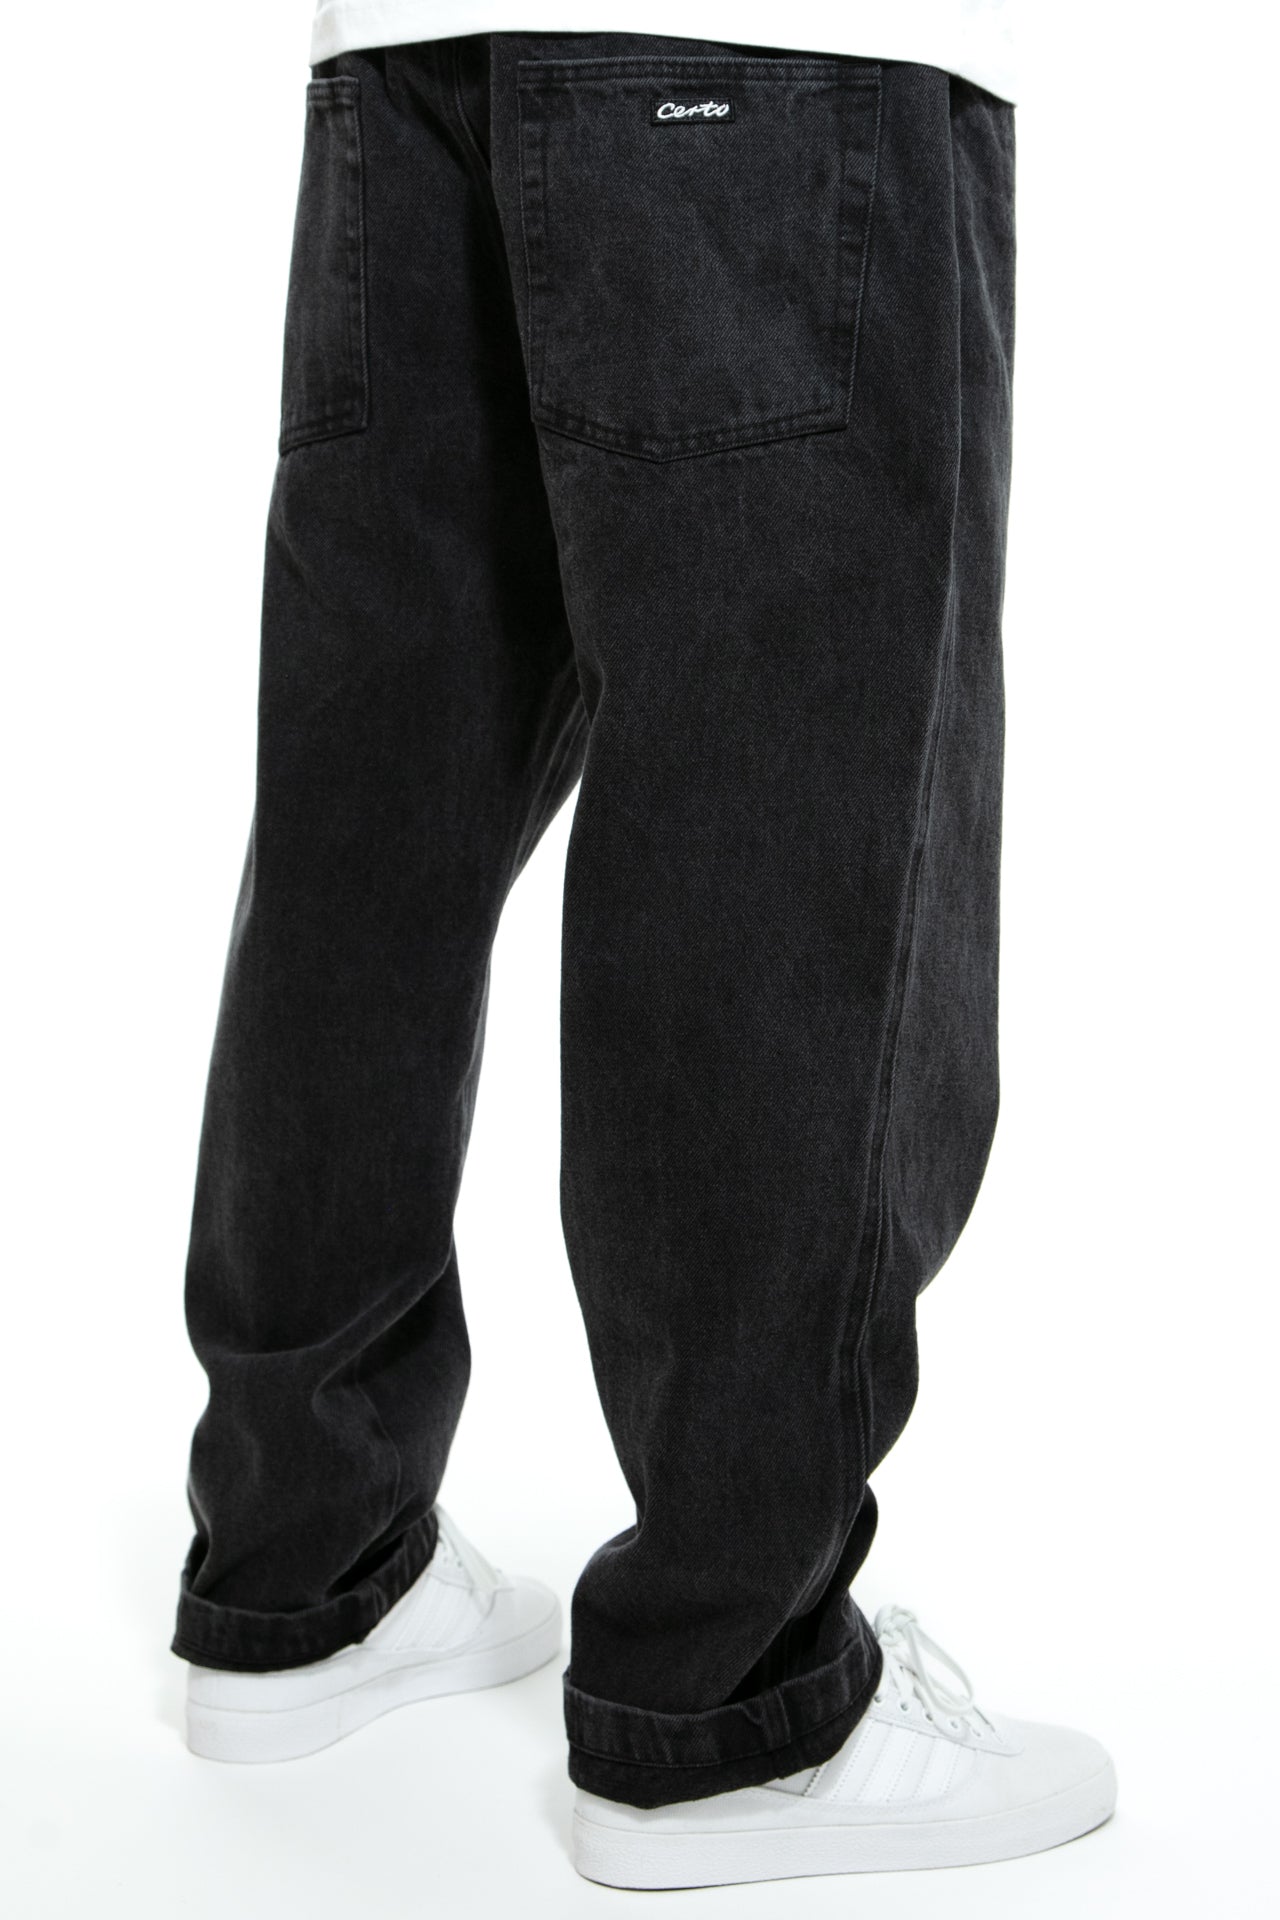 Denim Jeans T001 black washed pant – Certo pants